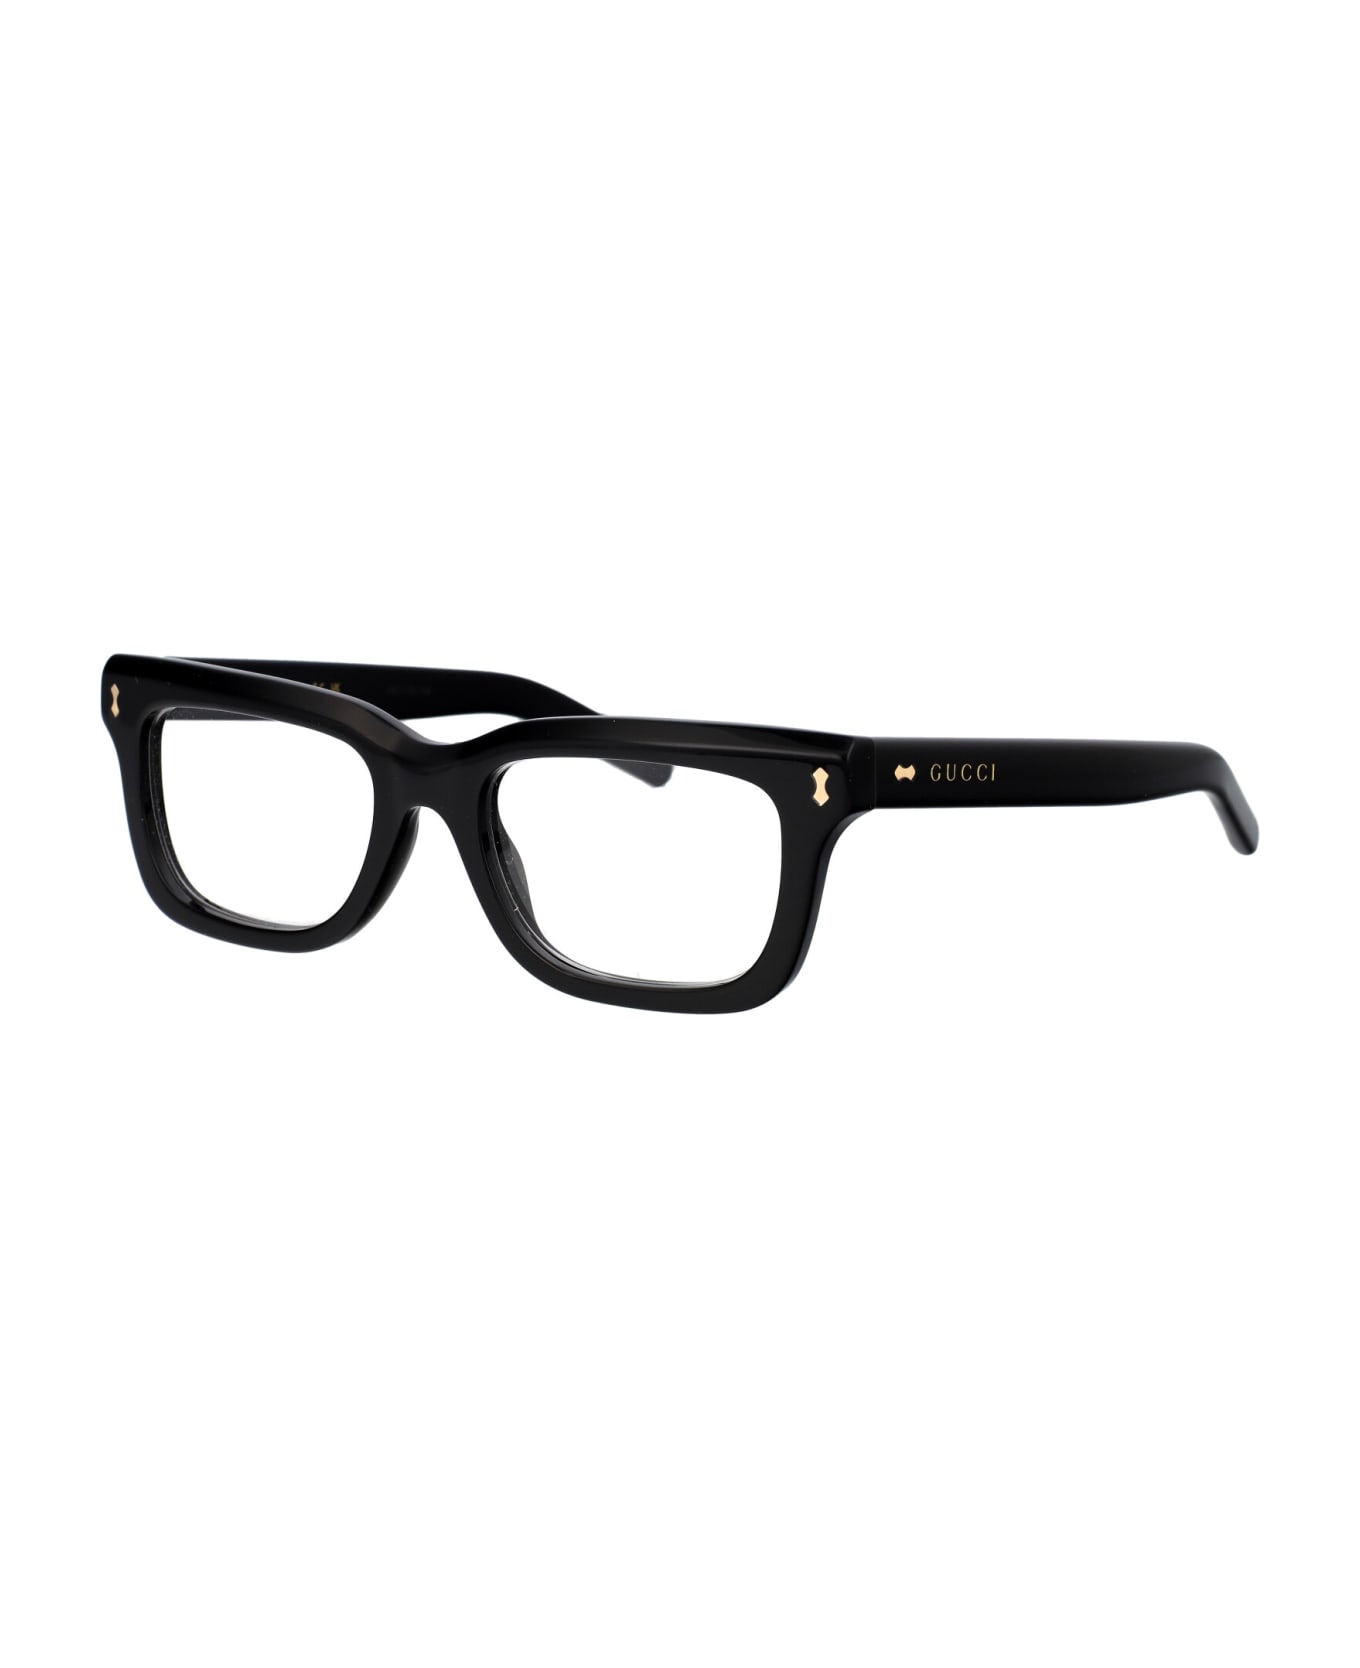 Gucci Eyewear Gg1522o Glasses - 005 BLACK BLACK TRANSPARENT